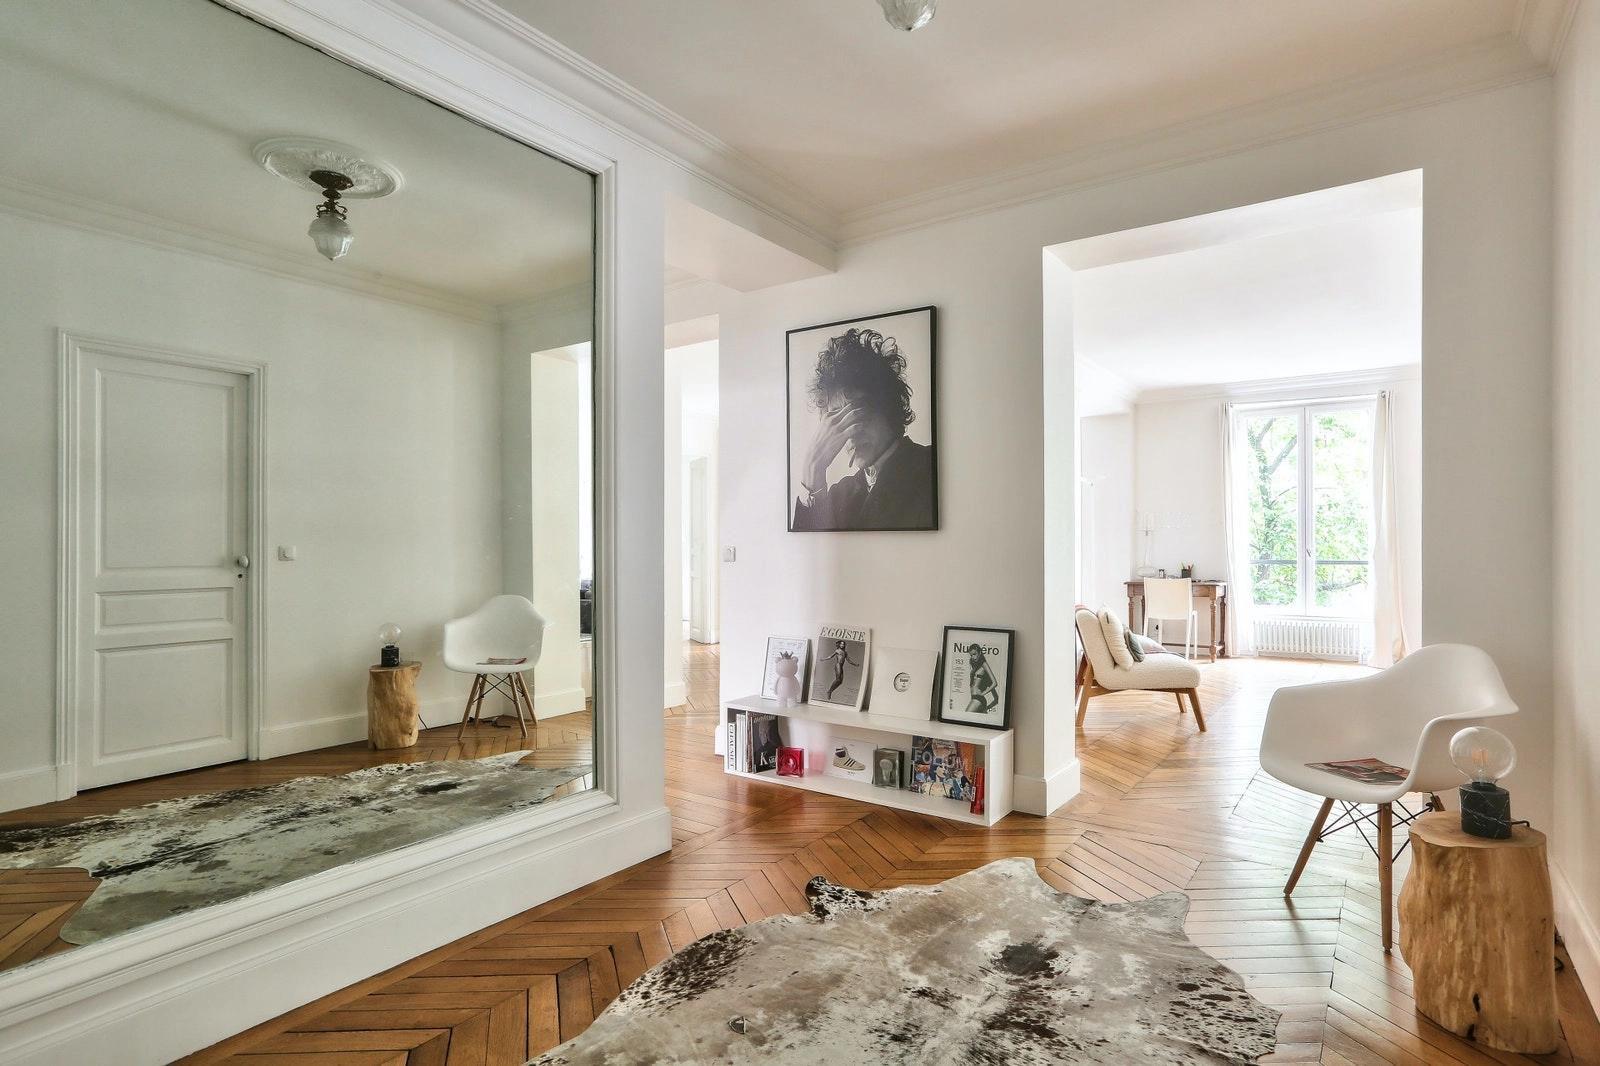 Sala dentro Preciosa, luminosa y cálida casa contemporánea de estilo Haussmann - 1